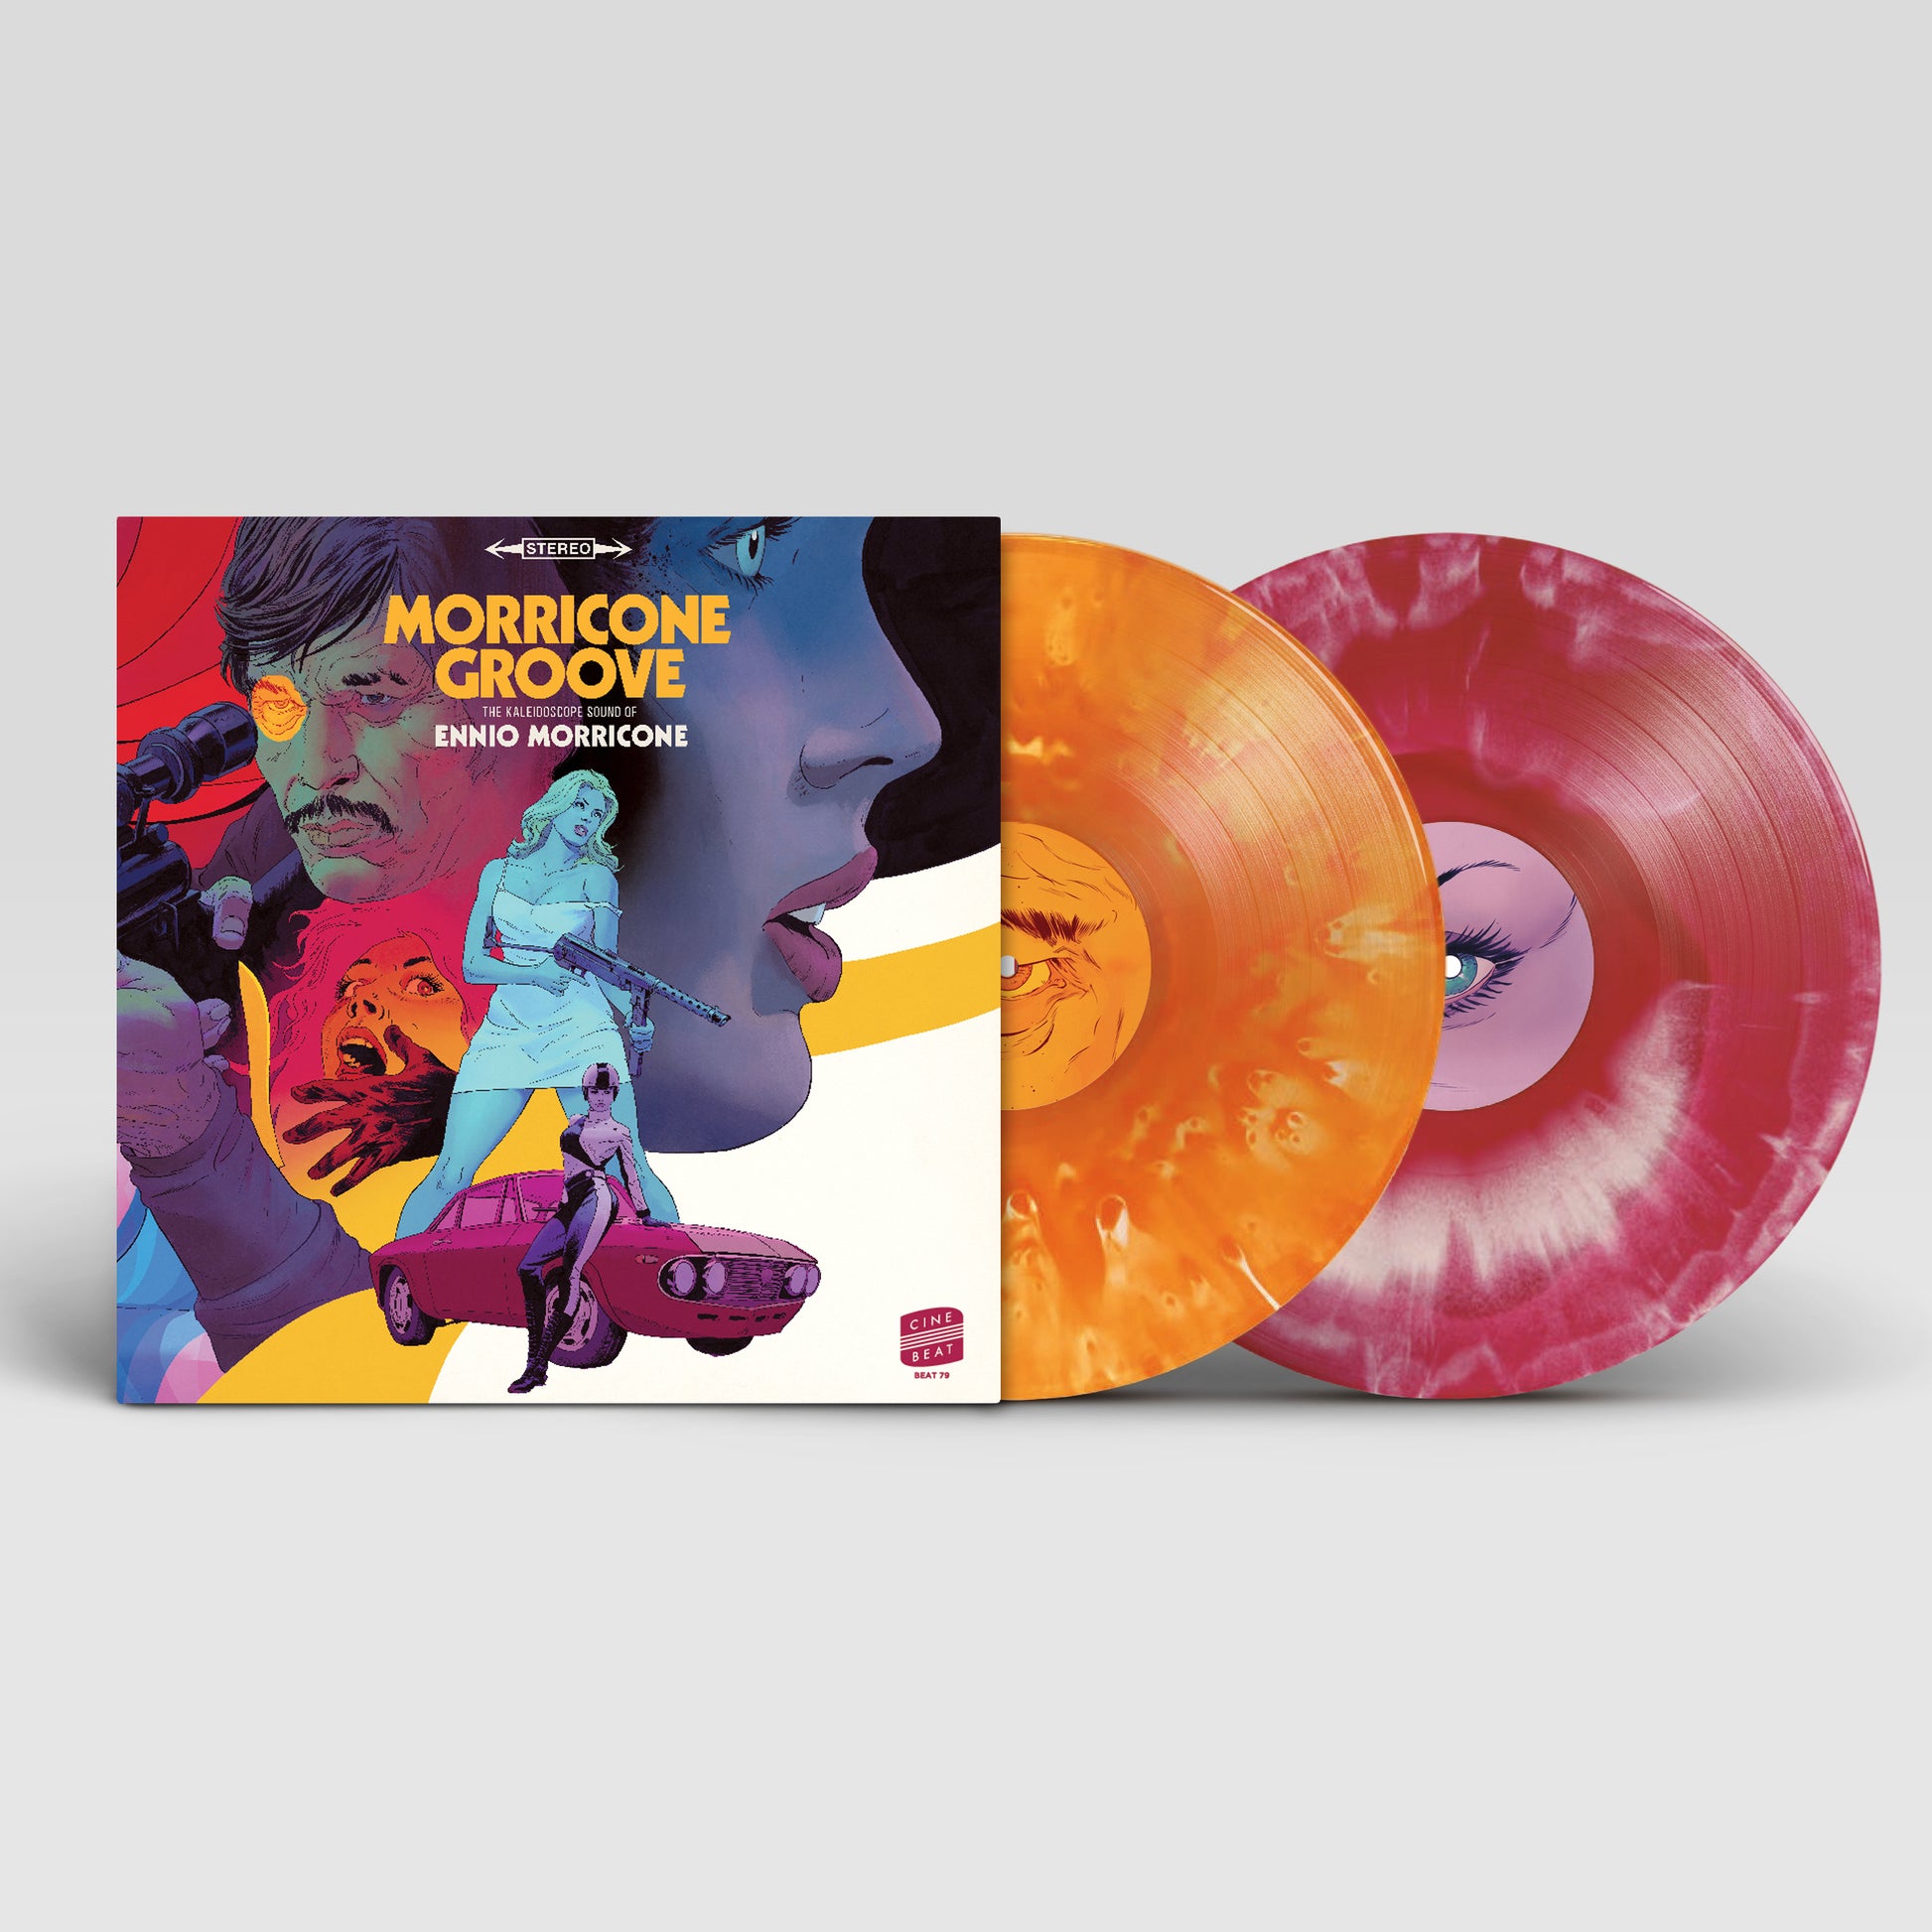 BEAT-79 - Ennio Morricone - Morricone Groove: The Kaleidoscope Sound of Ennio Morricone 1964-1977